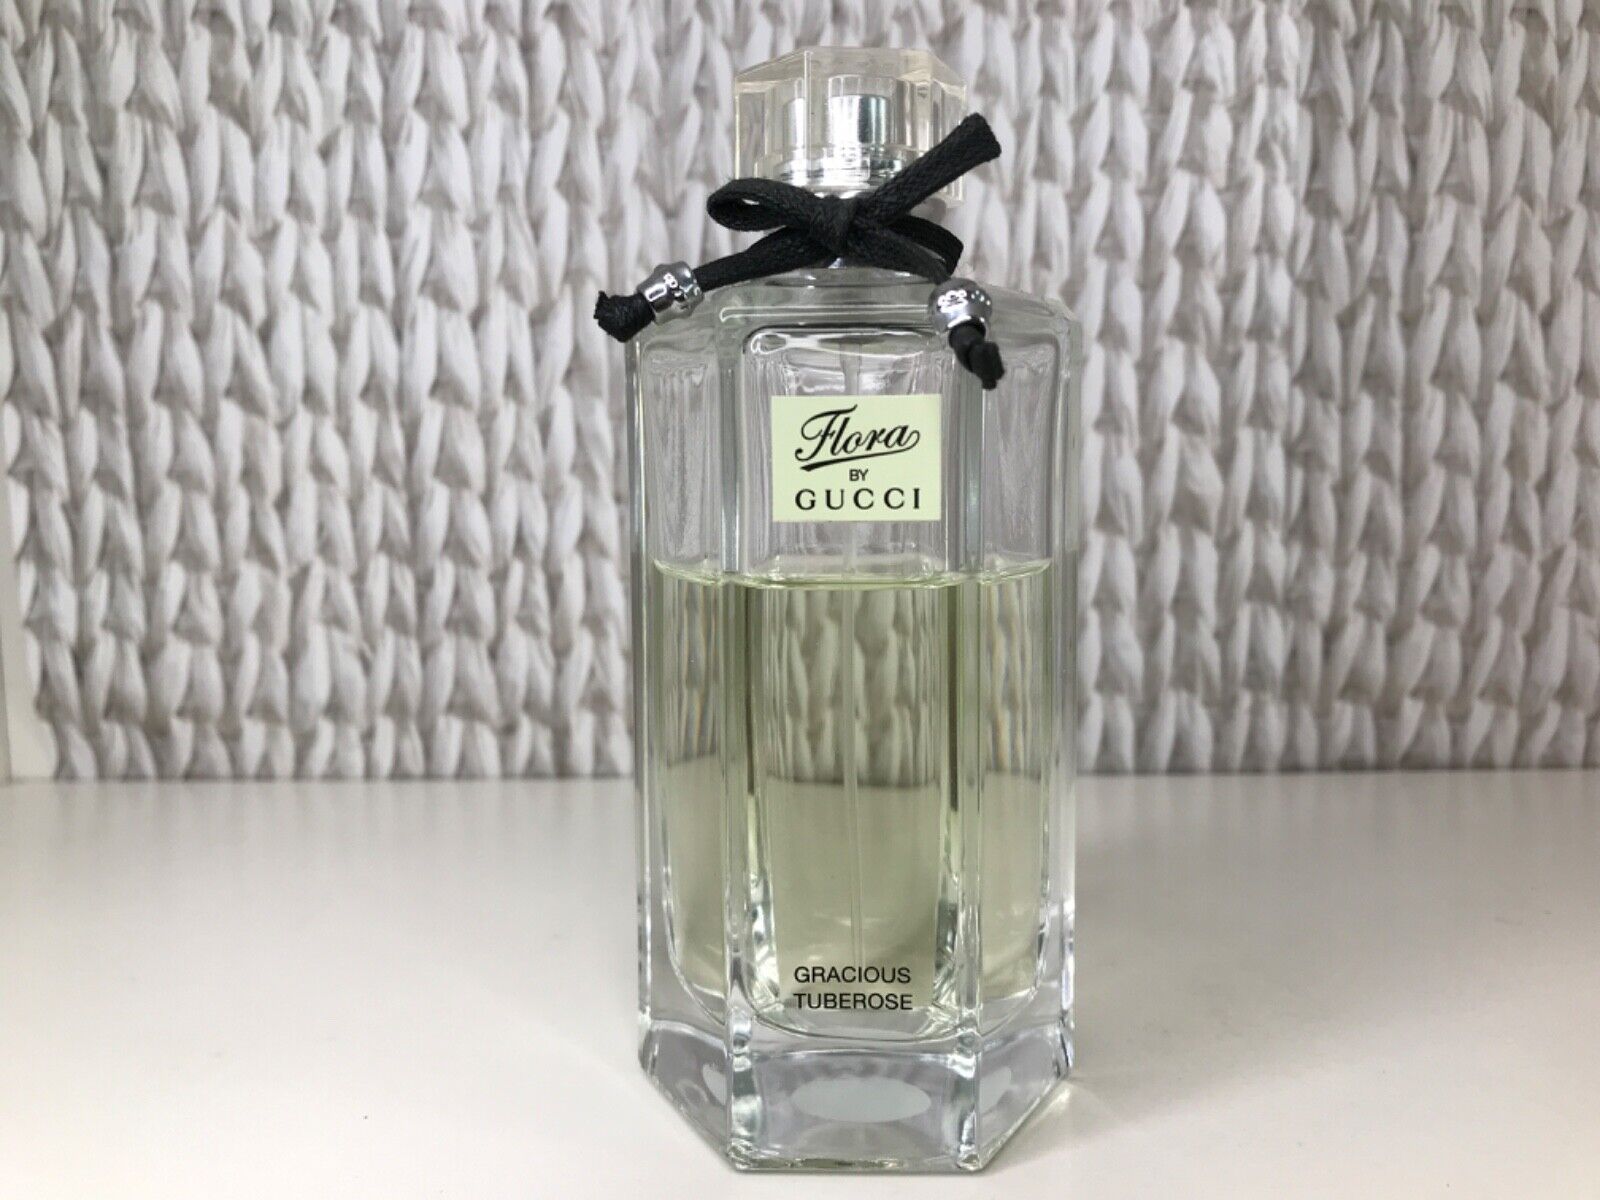 GUCCI Flora GRACIOUS TUBEROSE Perfume EDT Spray 3.3 oz/ 100 ml TESTR Original